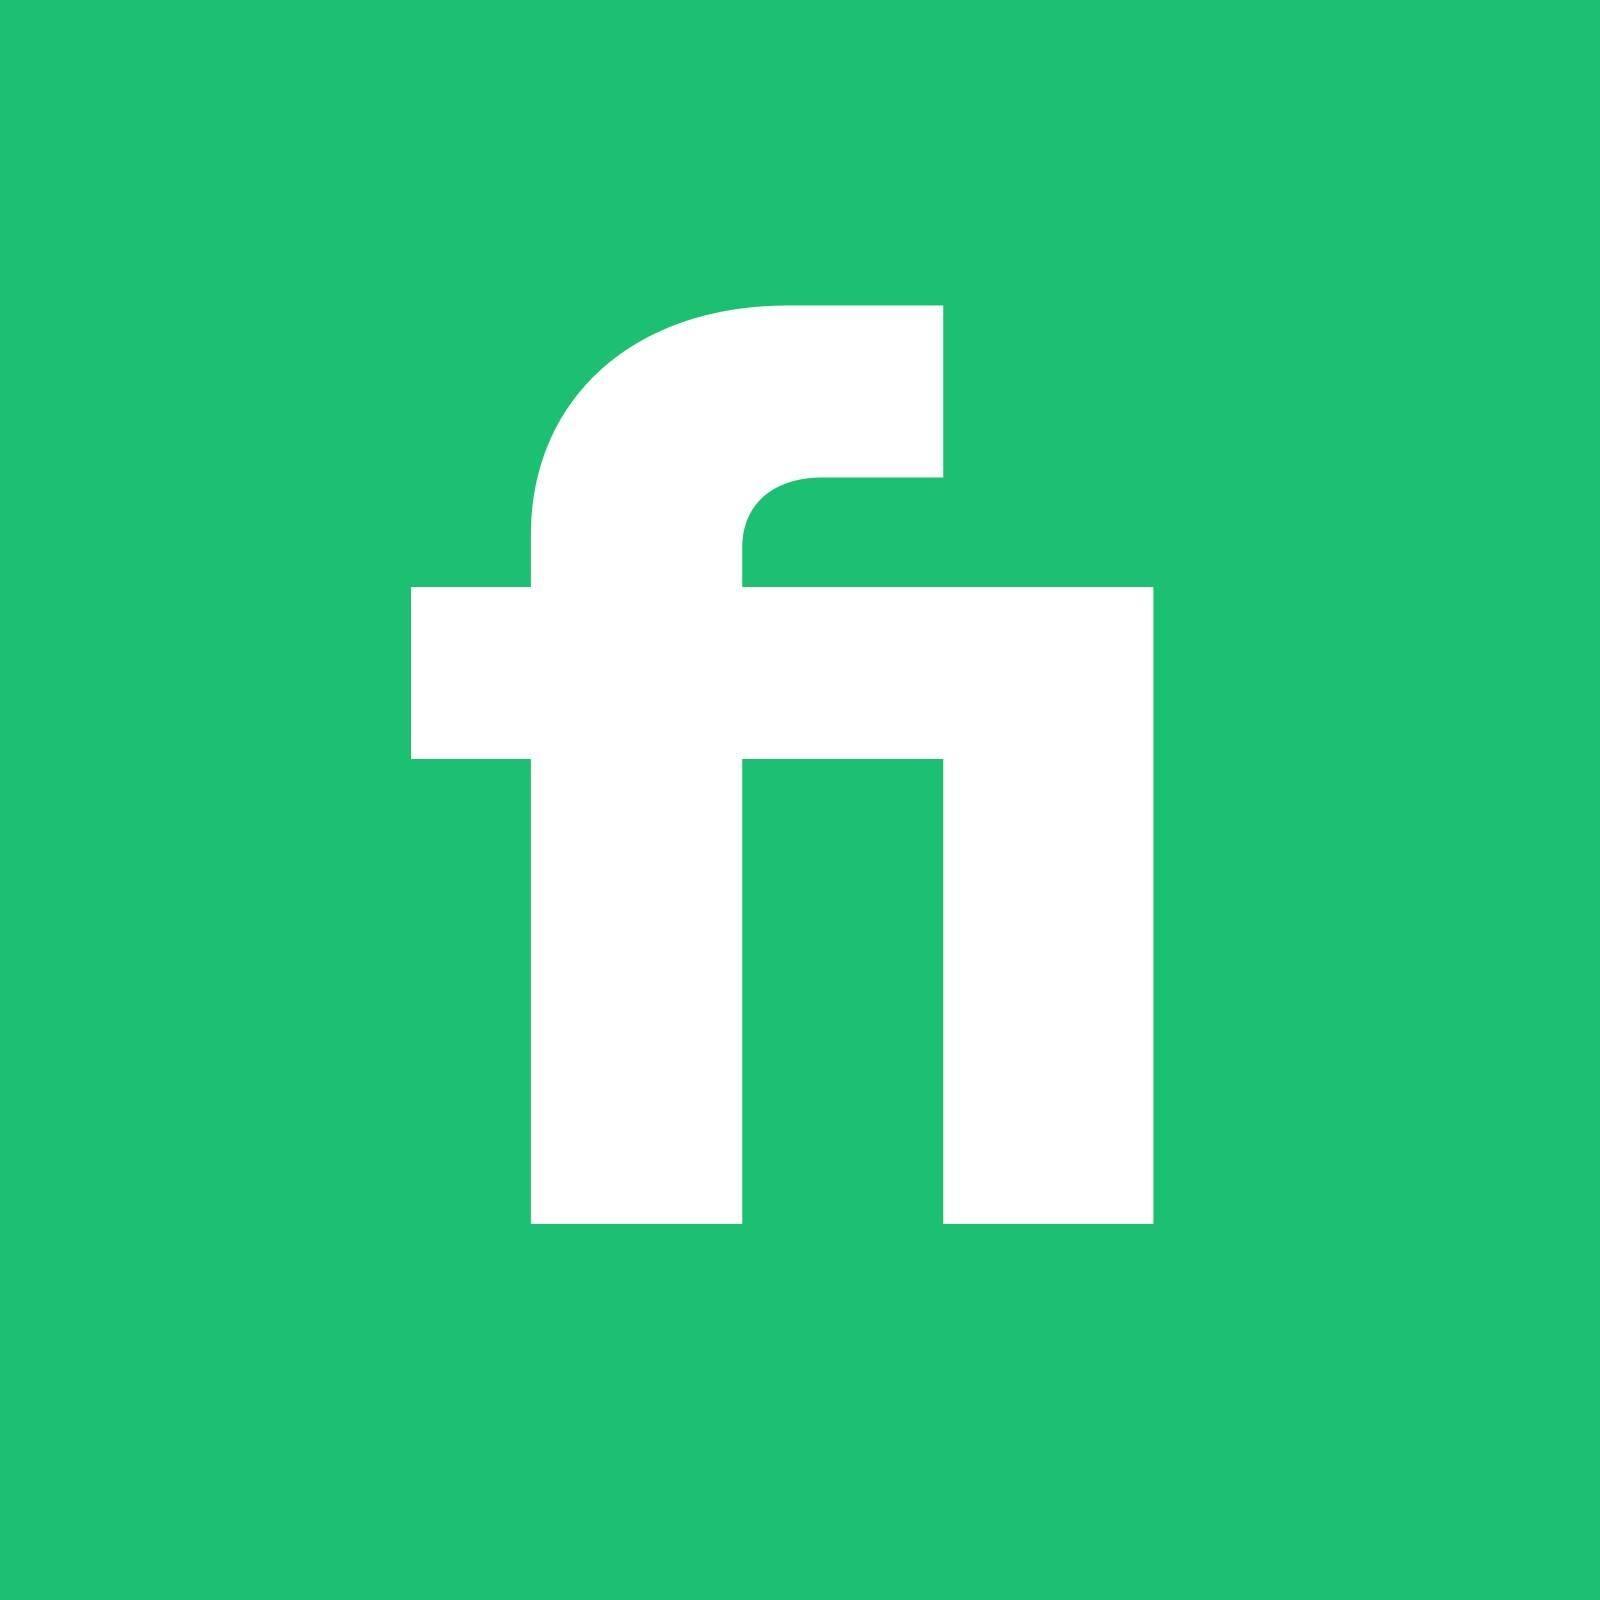 Logo da empresa Fiverr